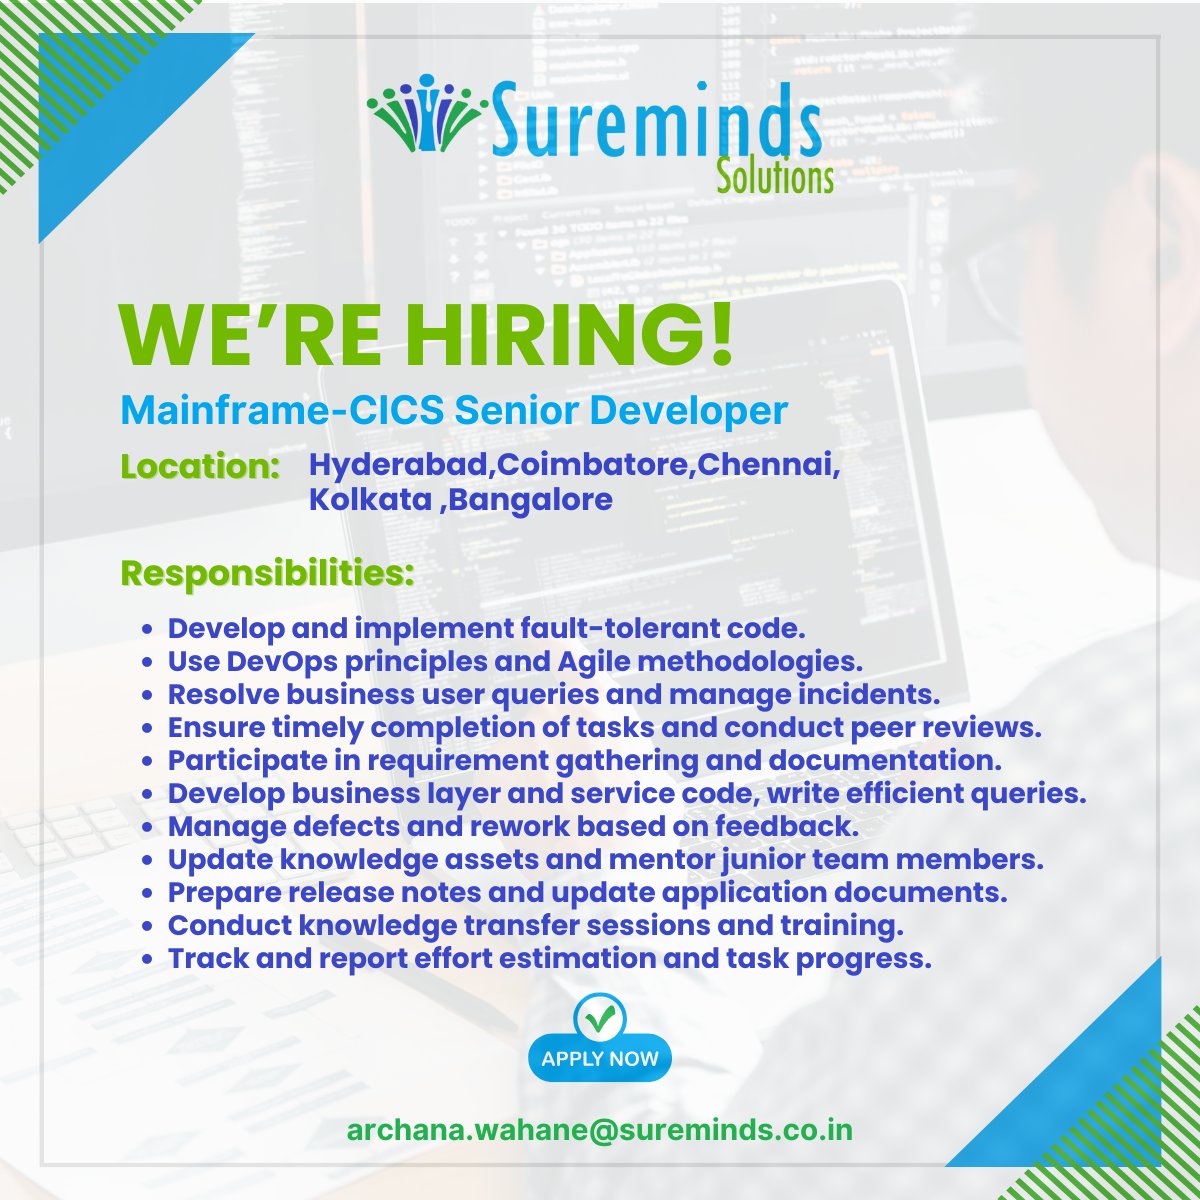 Immediate Joiners Wanted at @sureminds: Mainframe-CICS Senior Developer.

Apply Now!

#MainframeJobs #CICSDeveloper #ImmediateJoiners #ChennaiJobs #HyderabadJobs #CoimbatoreJobs #BangaloreJobs #KolkataJobs #DevOps #AgileMethodology #FaultTolerantCode #BusinessLayerCoding